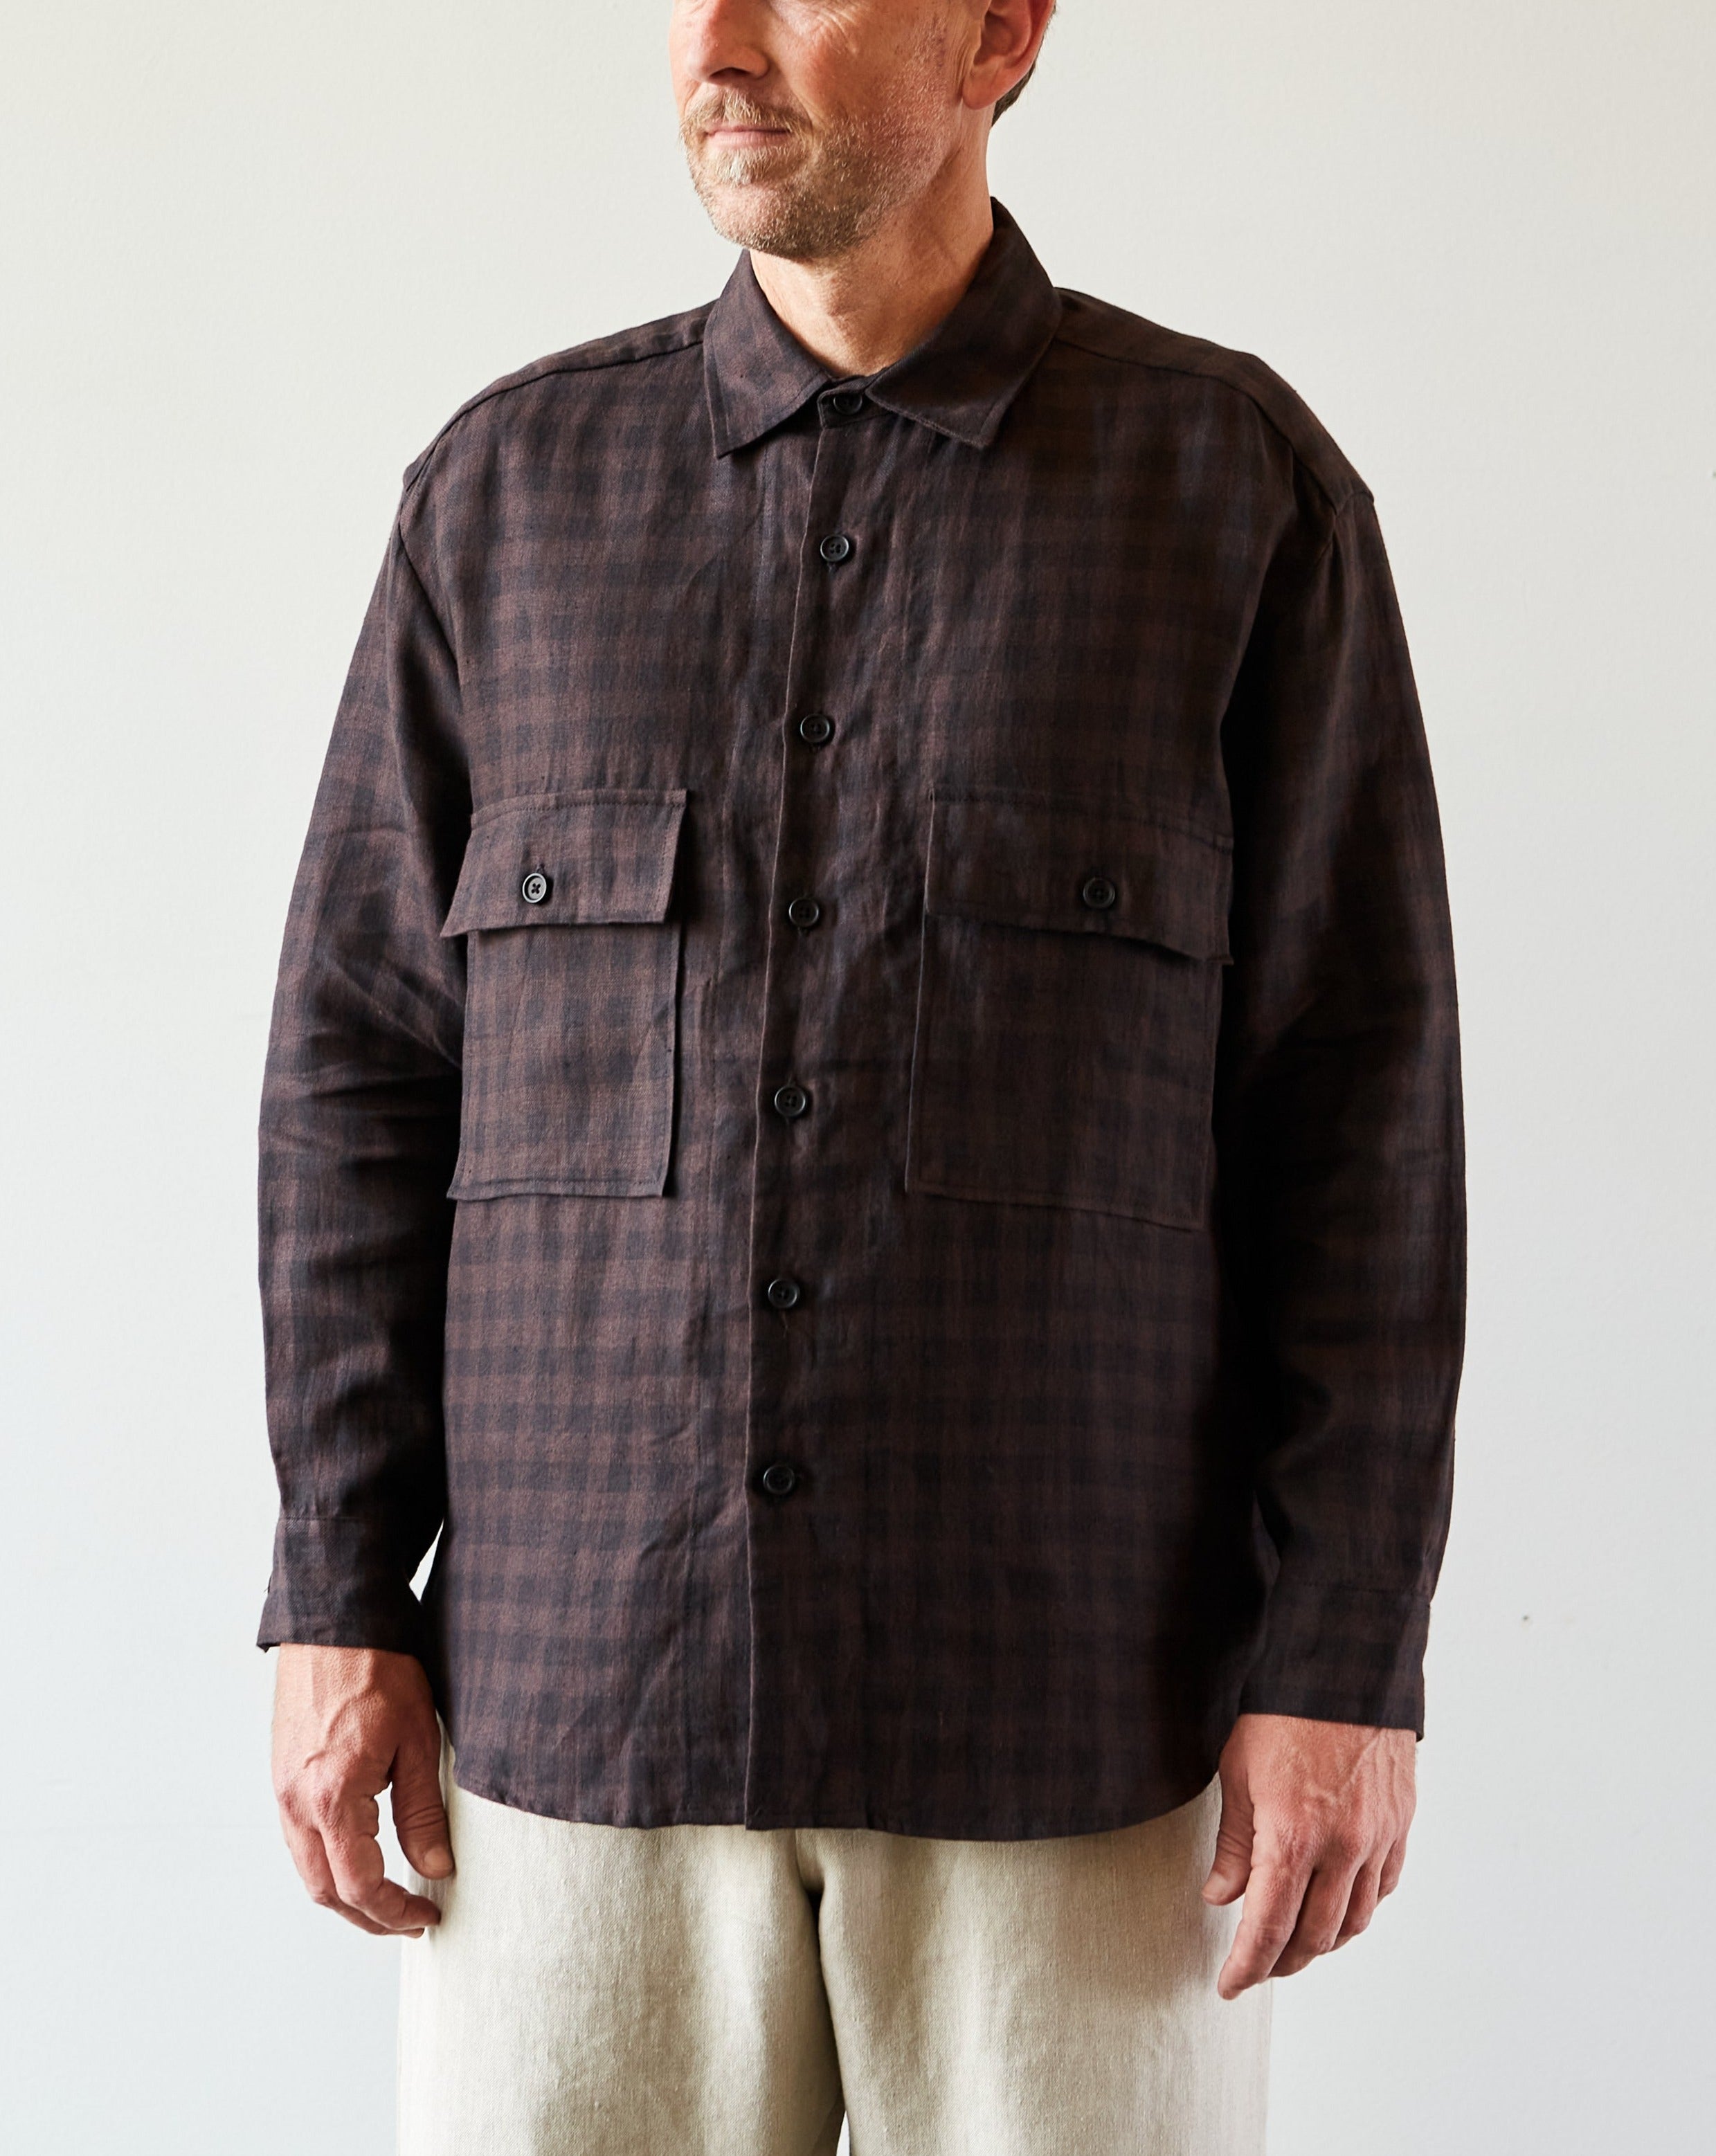 Evan Kinori Big Shirt, Irish Linen Check | Glasswing